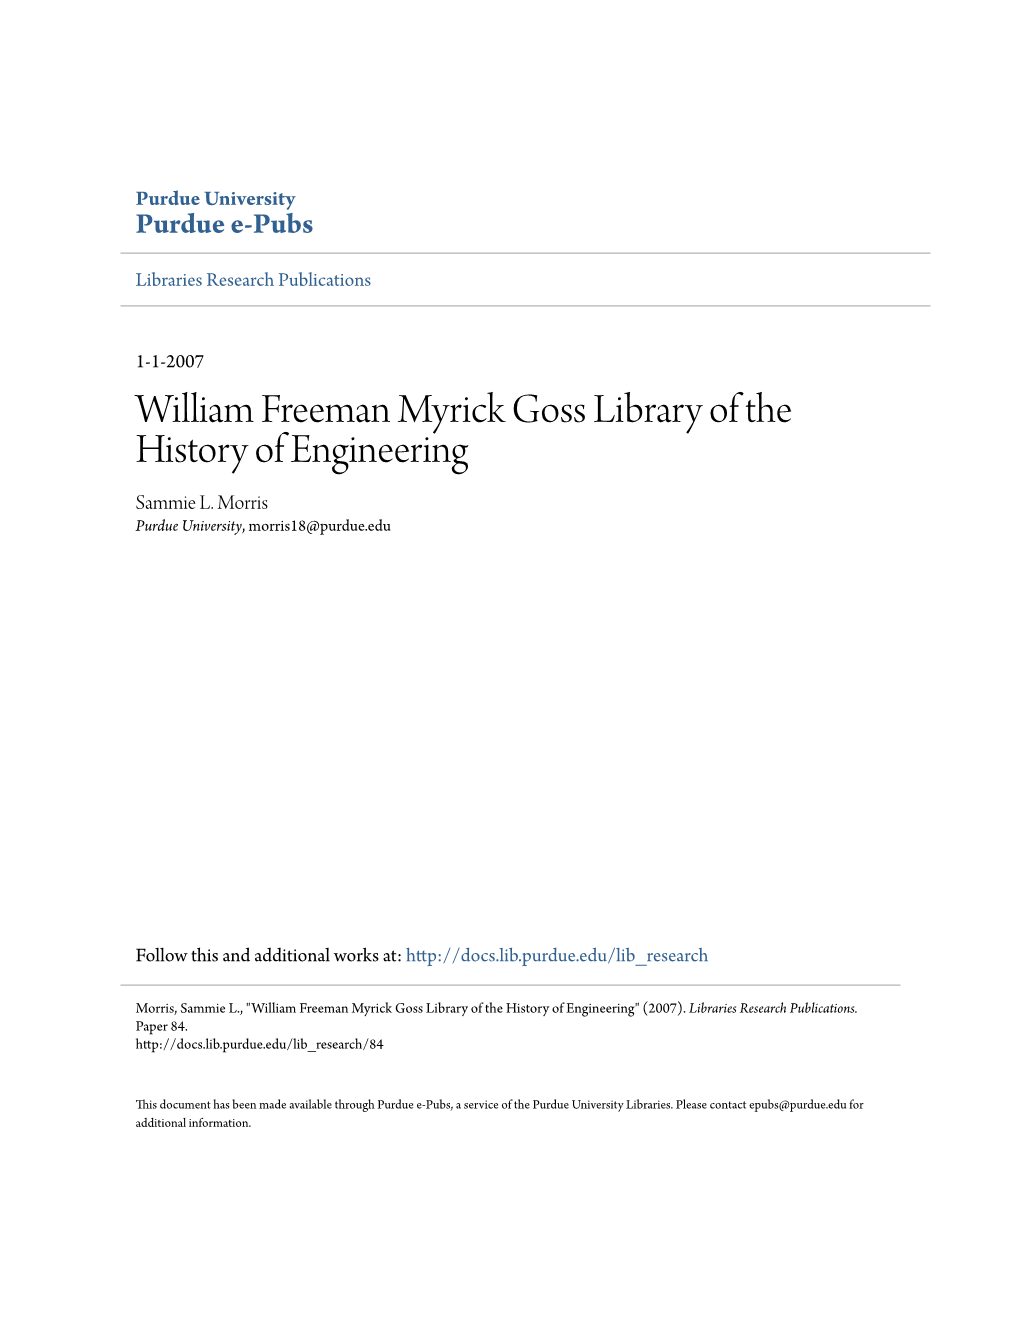 William Freeman Myrick Goss Library of the History of Engineering Sammie L